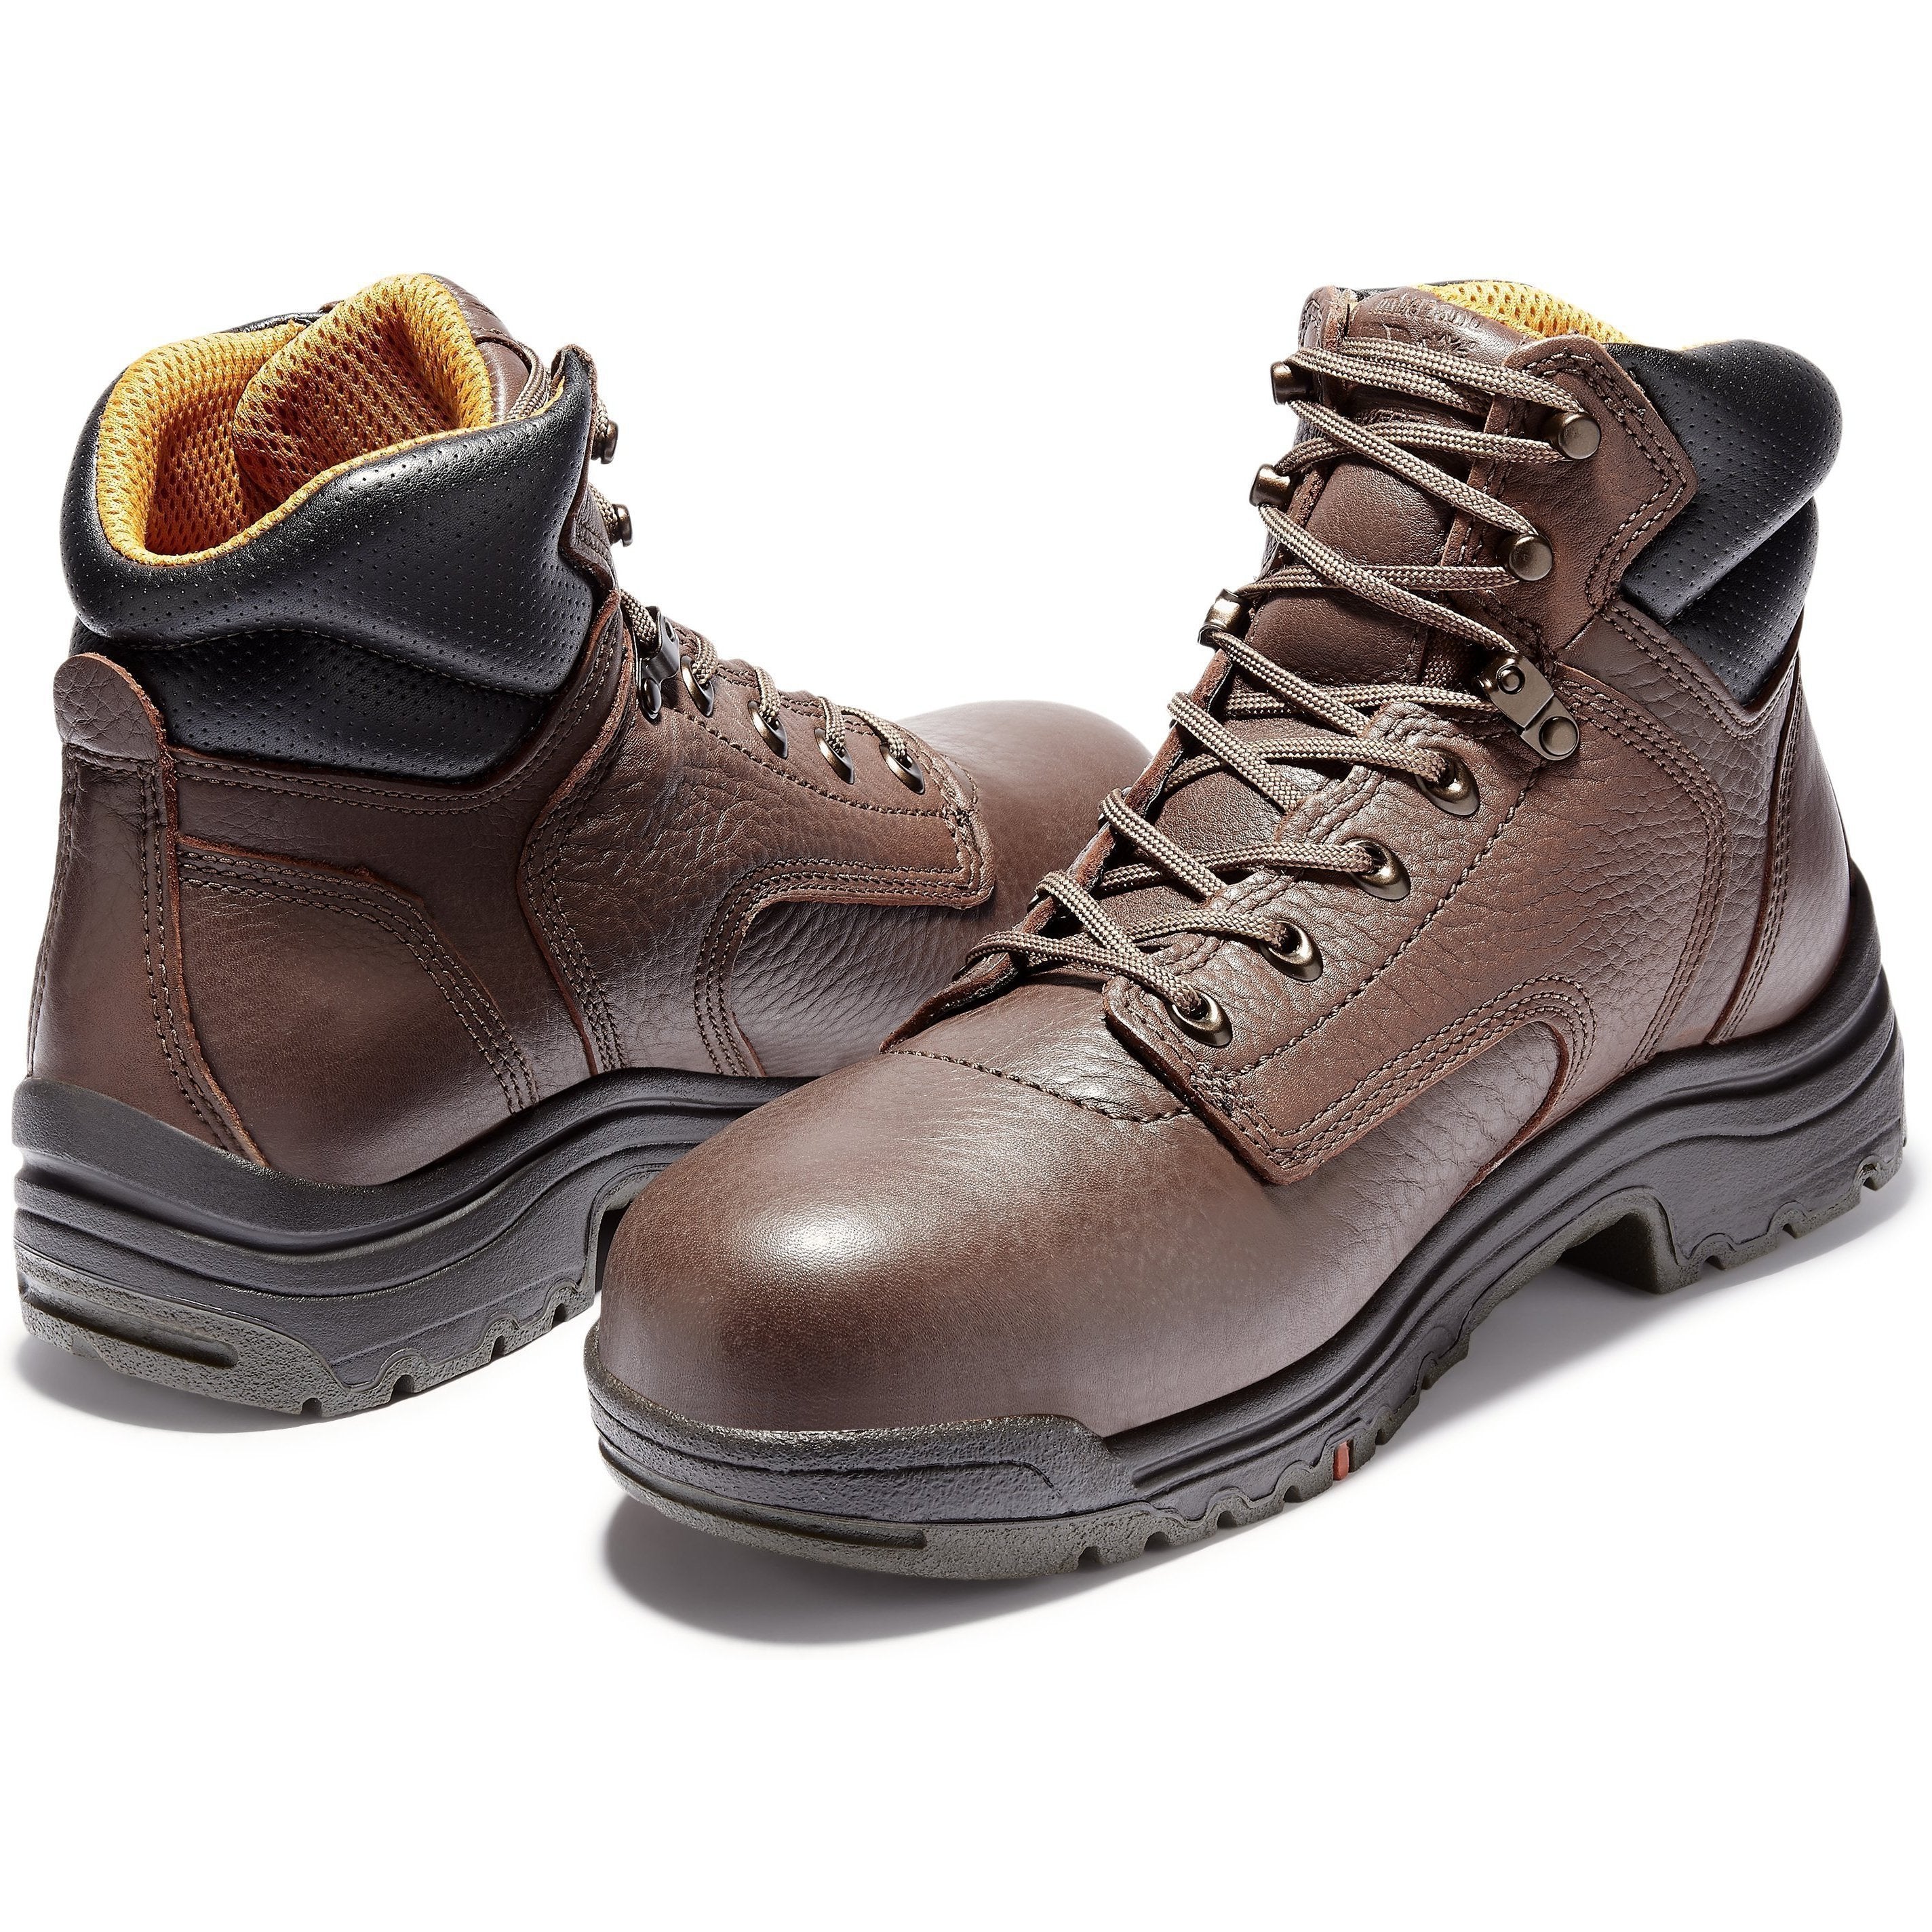 Timberland PRO Men's TiTAN 6" Alloy Toe WP Work Boot Mocha TB026078242  - Overlook Boots